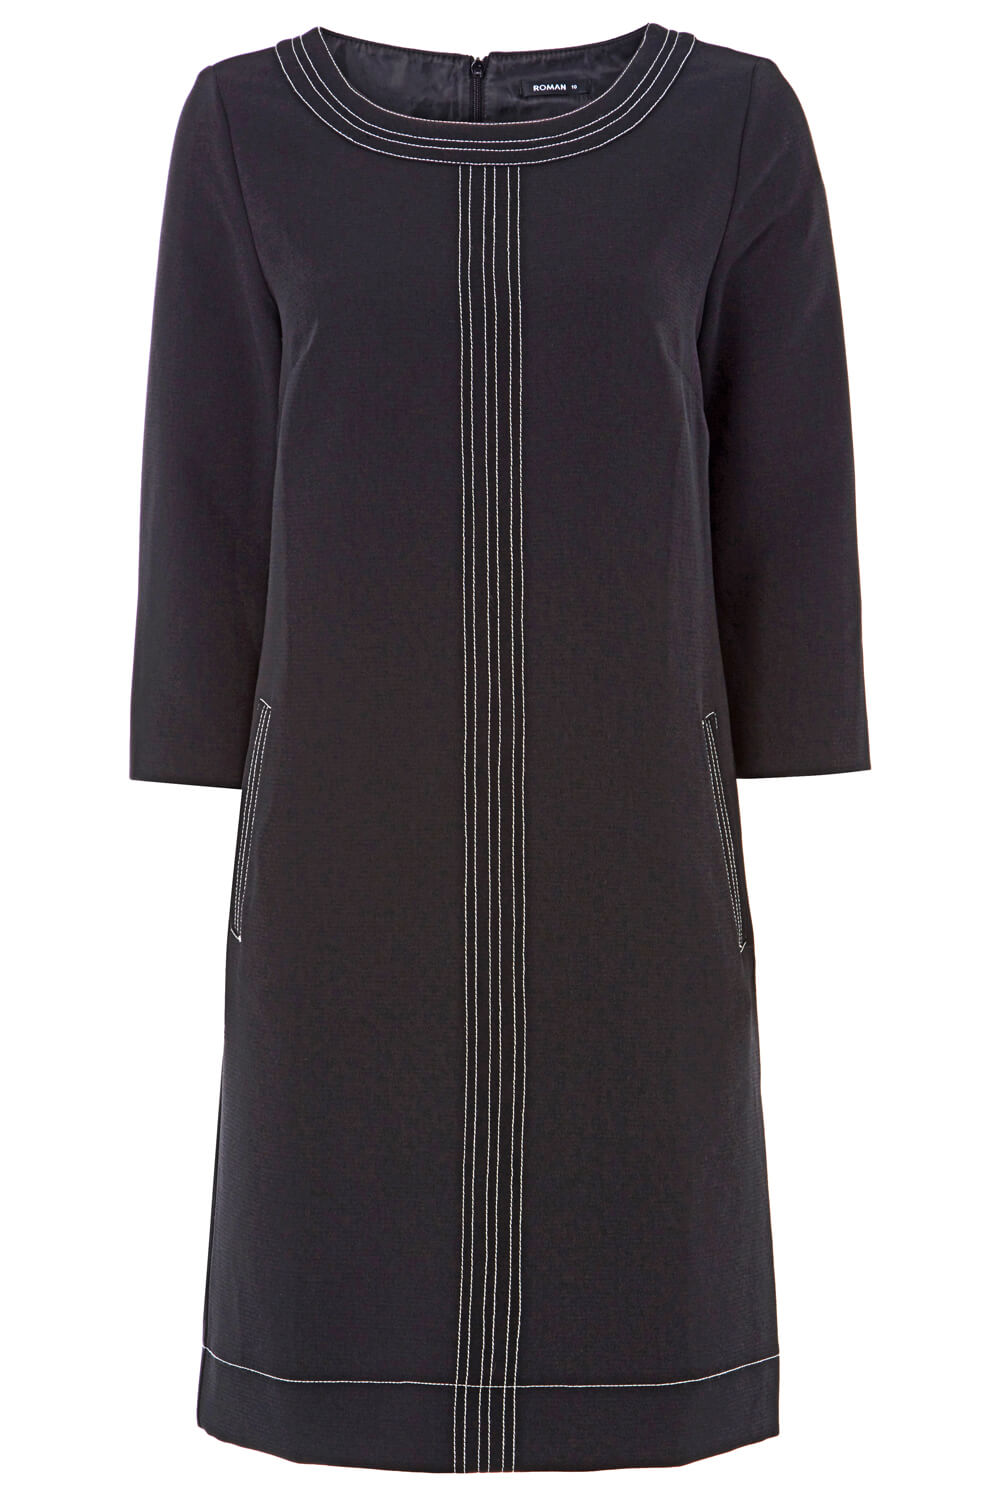 Black 3/4 Sleeve Top Stitch Shift Dress, Image 5 of 5